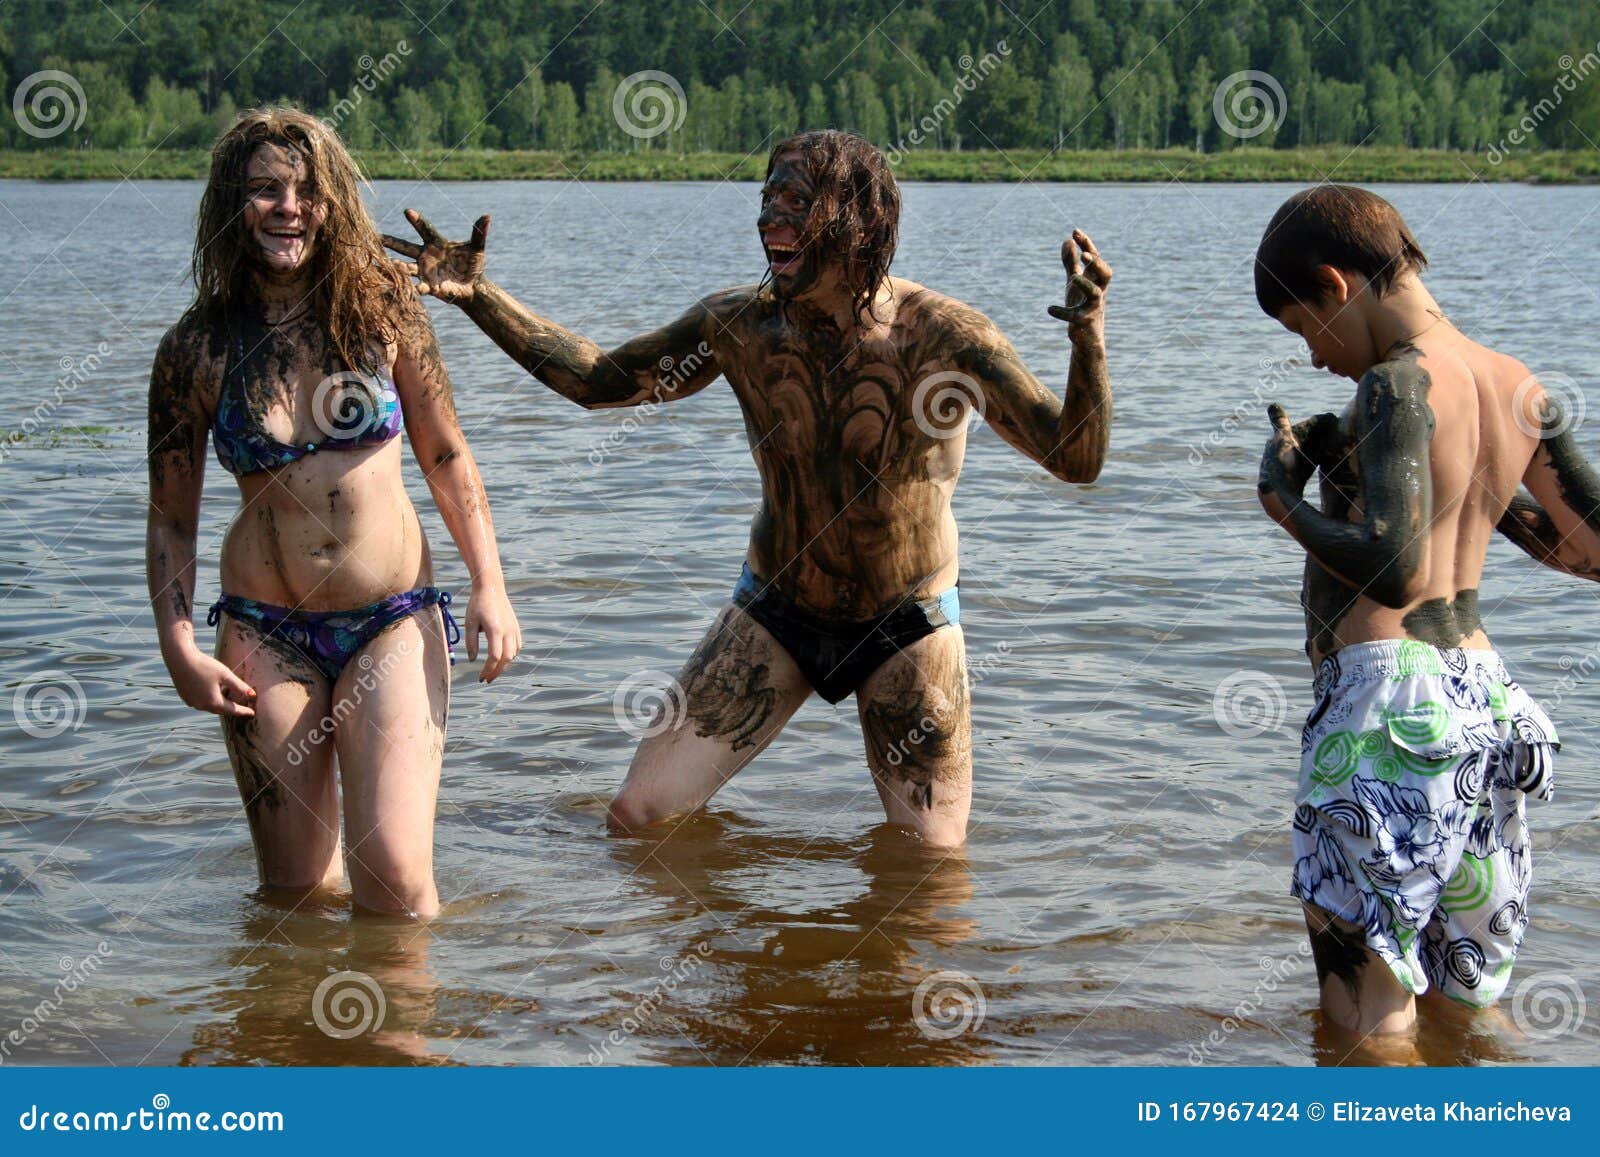 anahi ramos add photo nudist family russia